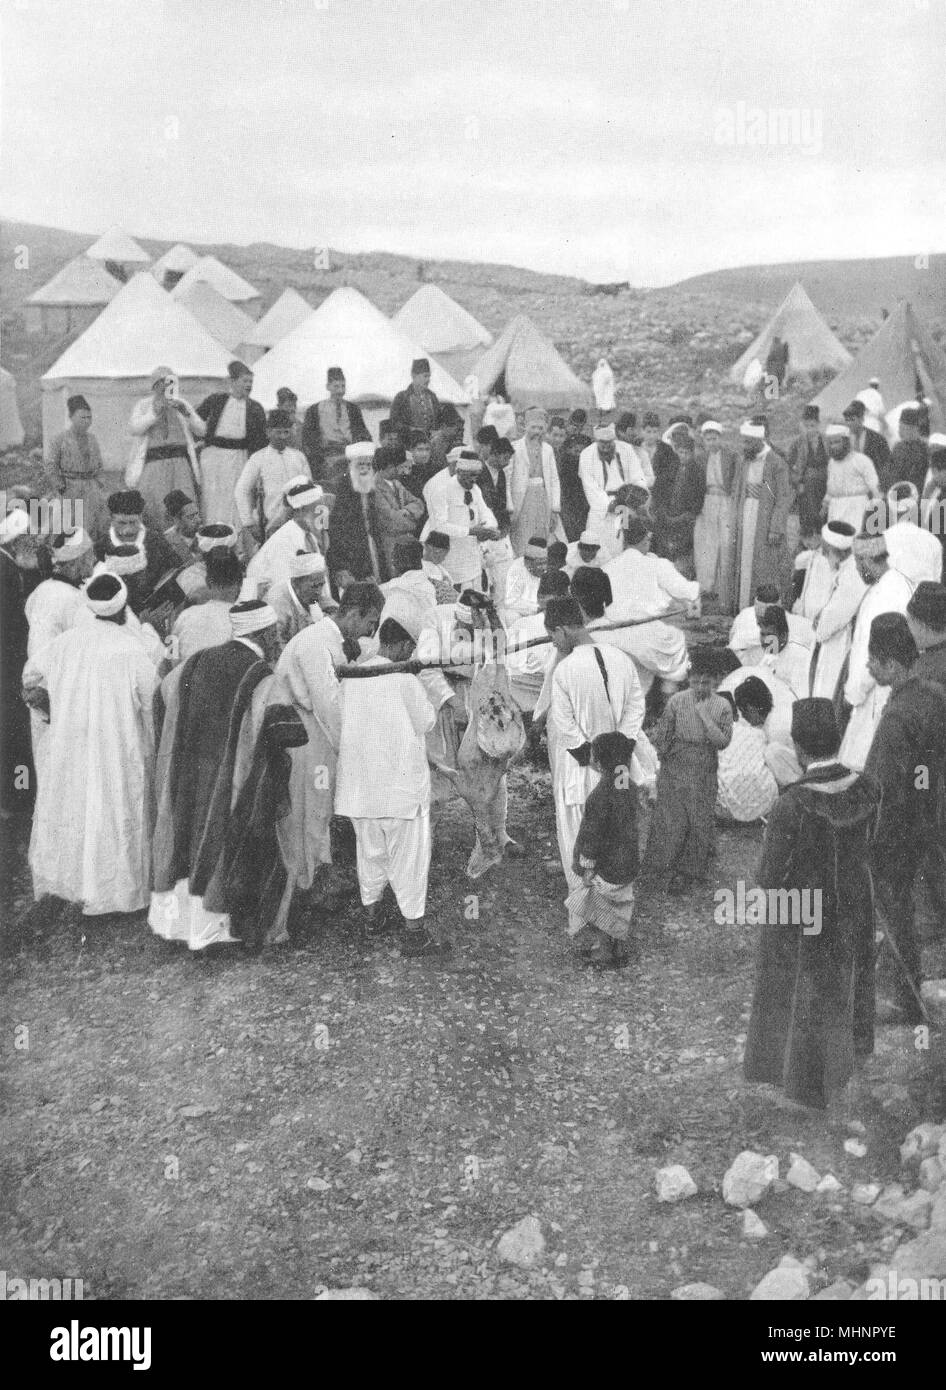 Religiöse. Religiöse fest; Ostern 1900 alte antike vintage Bild drucken Stockfoto